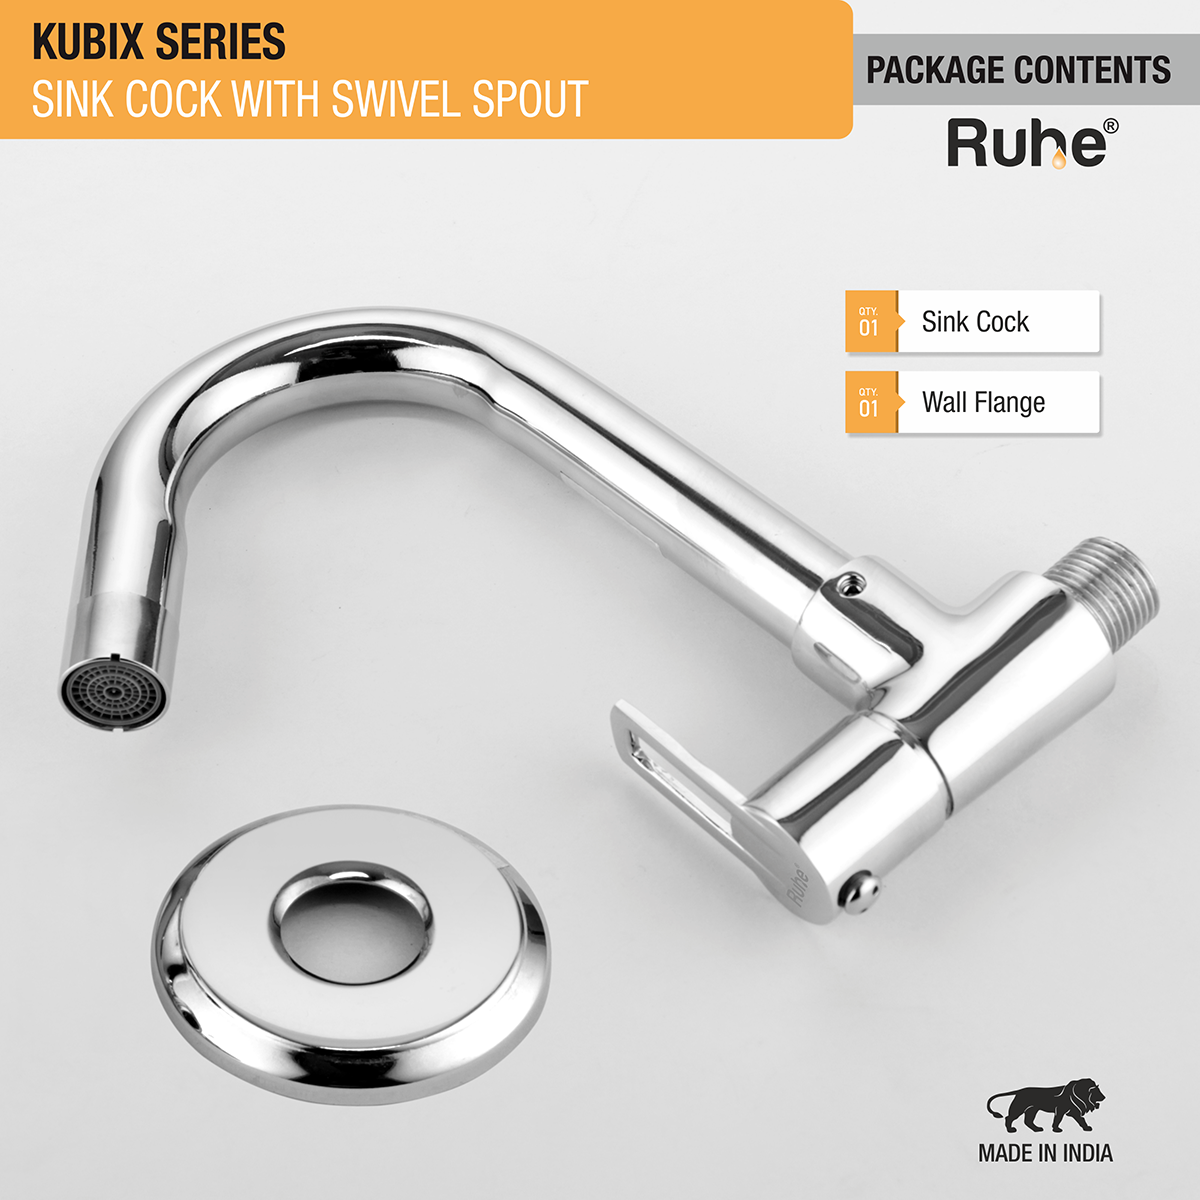 Kubix Sink Tap With Swivel Spout Faucet package content